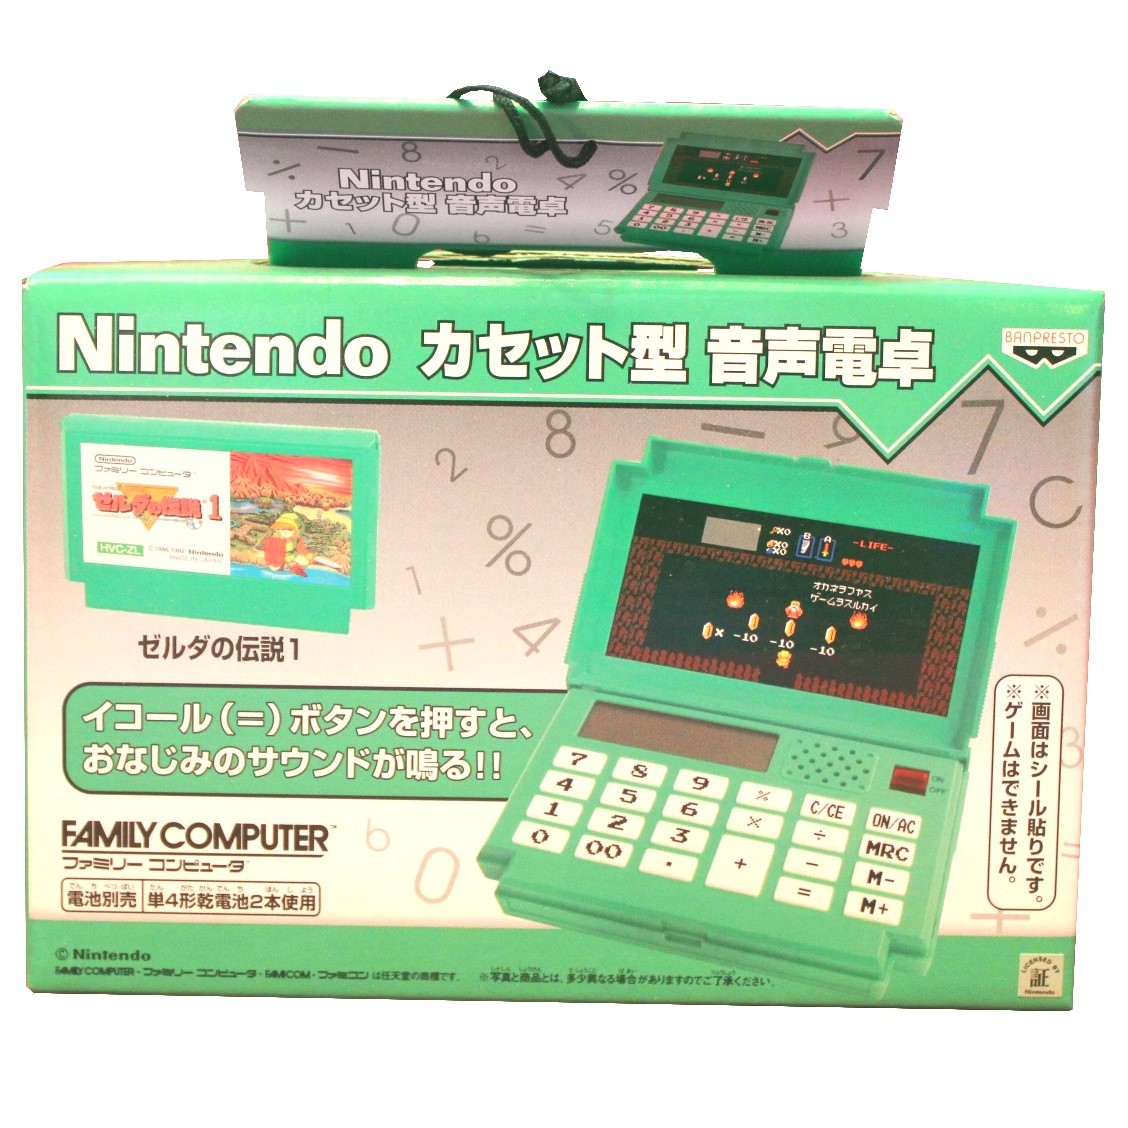 Famicom Calculator by Banpresto, Japan 2005.